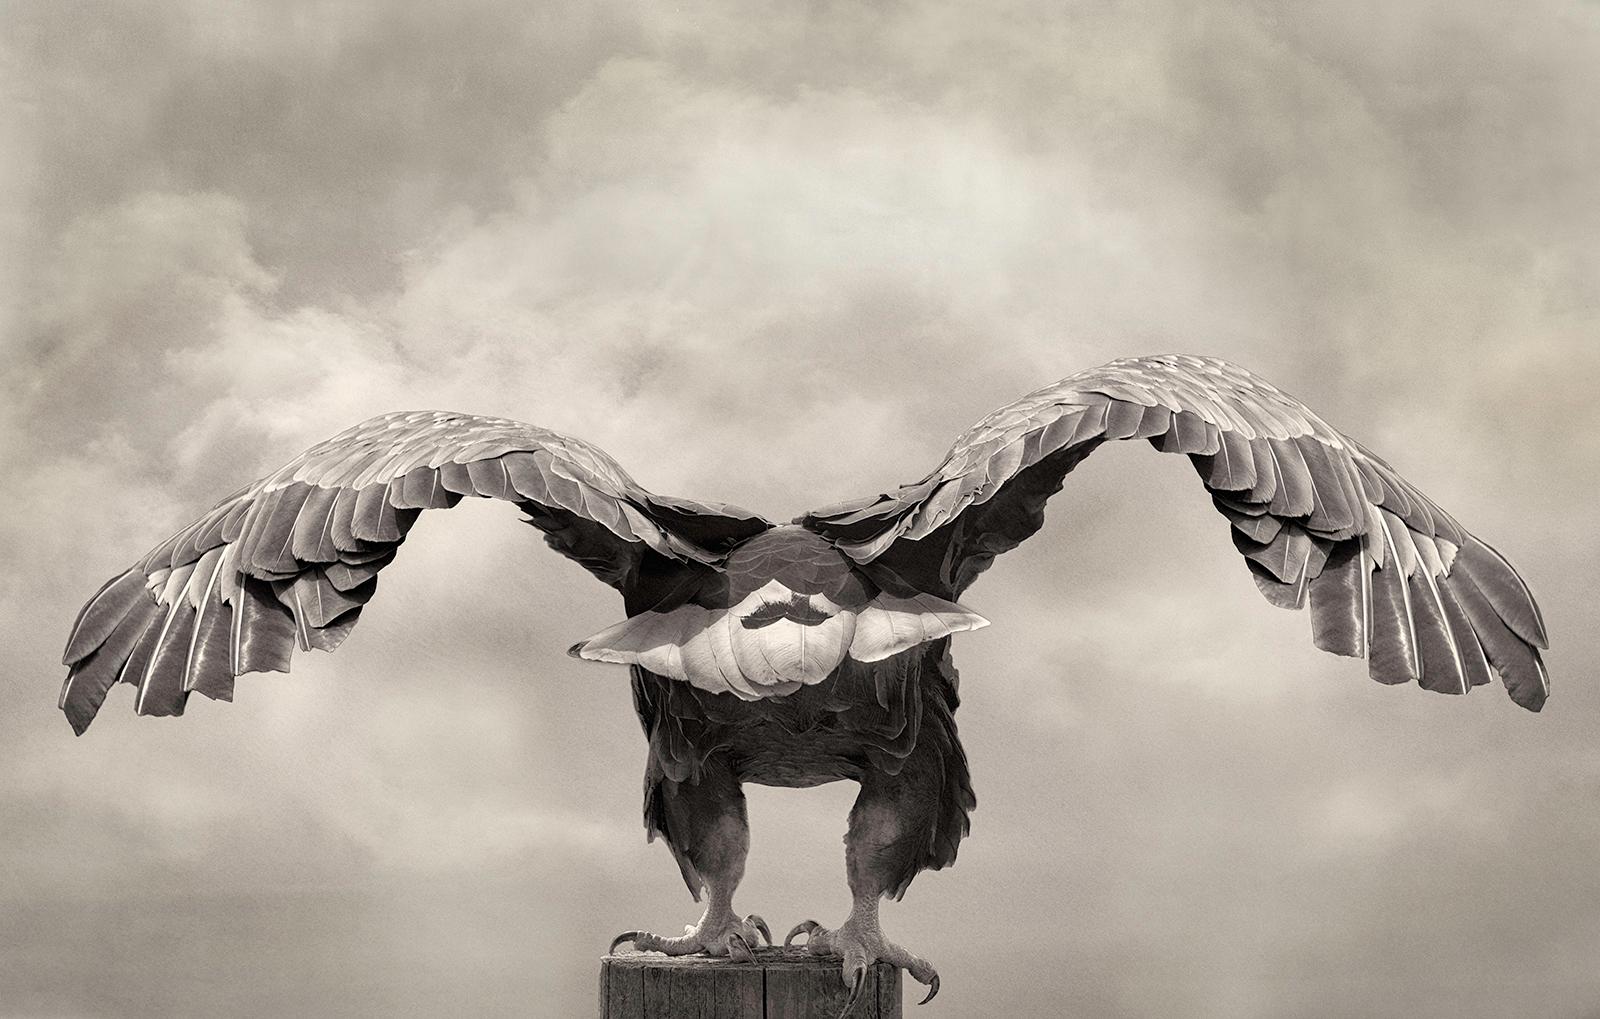 Beth Moon Black and White Photograph - Sea Eagle, limited edition photograph, signed, Platinum/Palladium Print